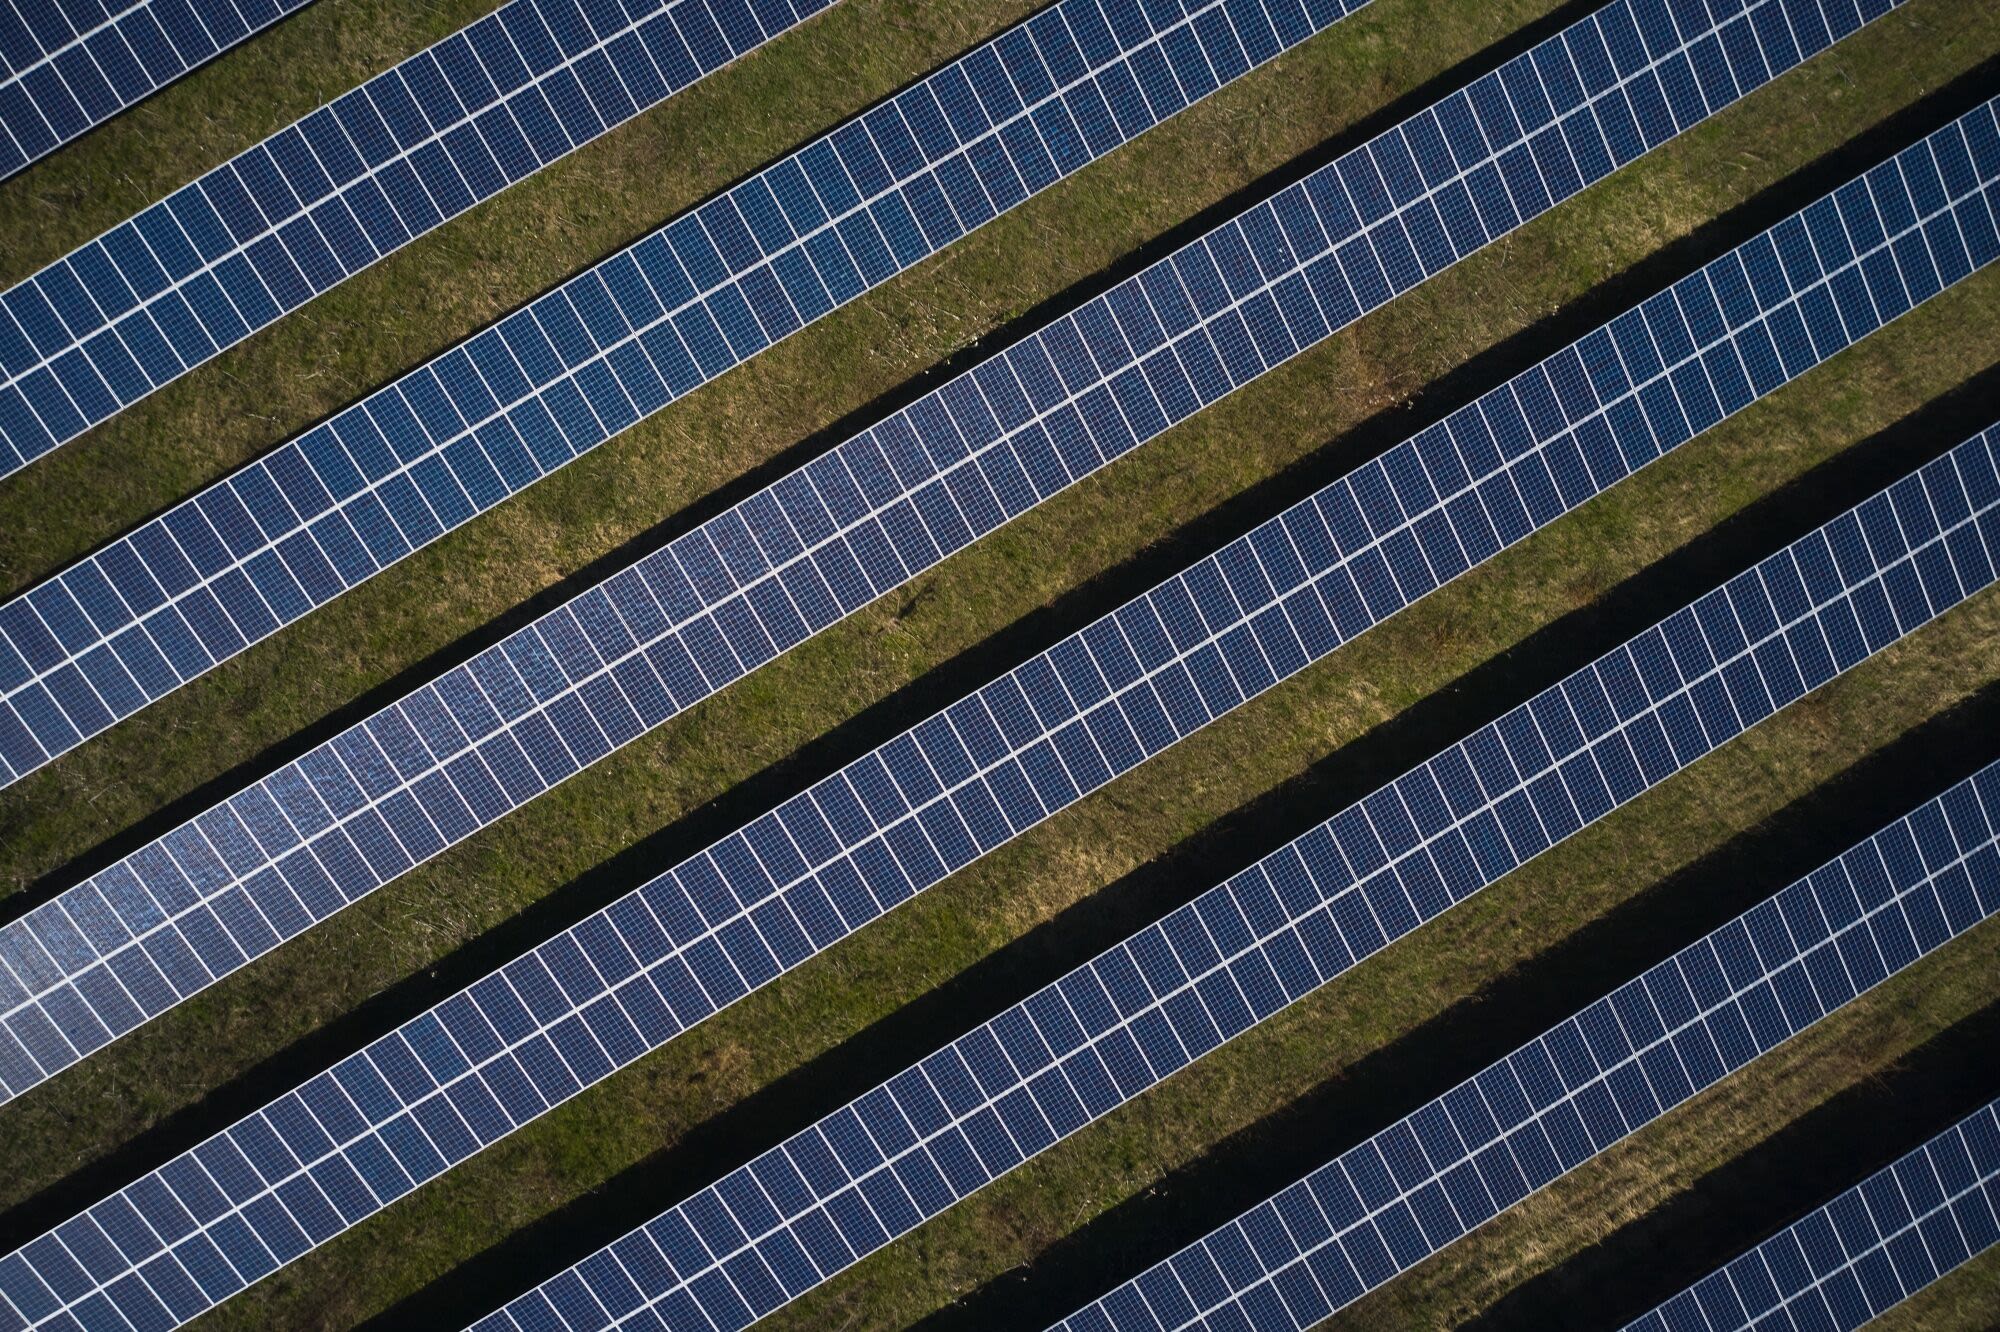 US Senators Move to Deny China Solar Firms Lucrative Tax Credits